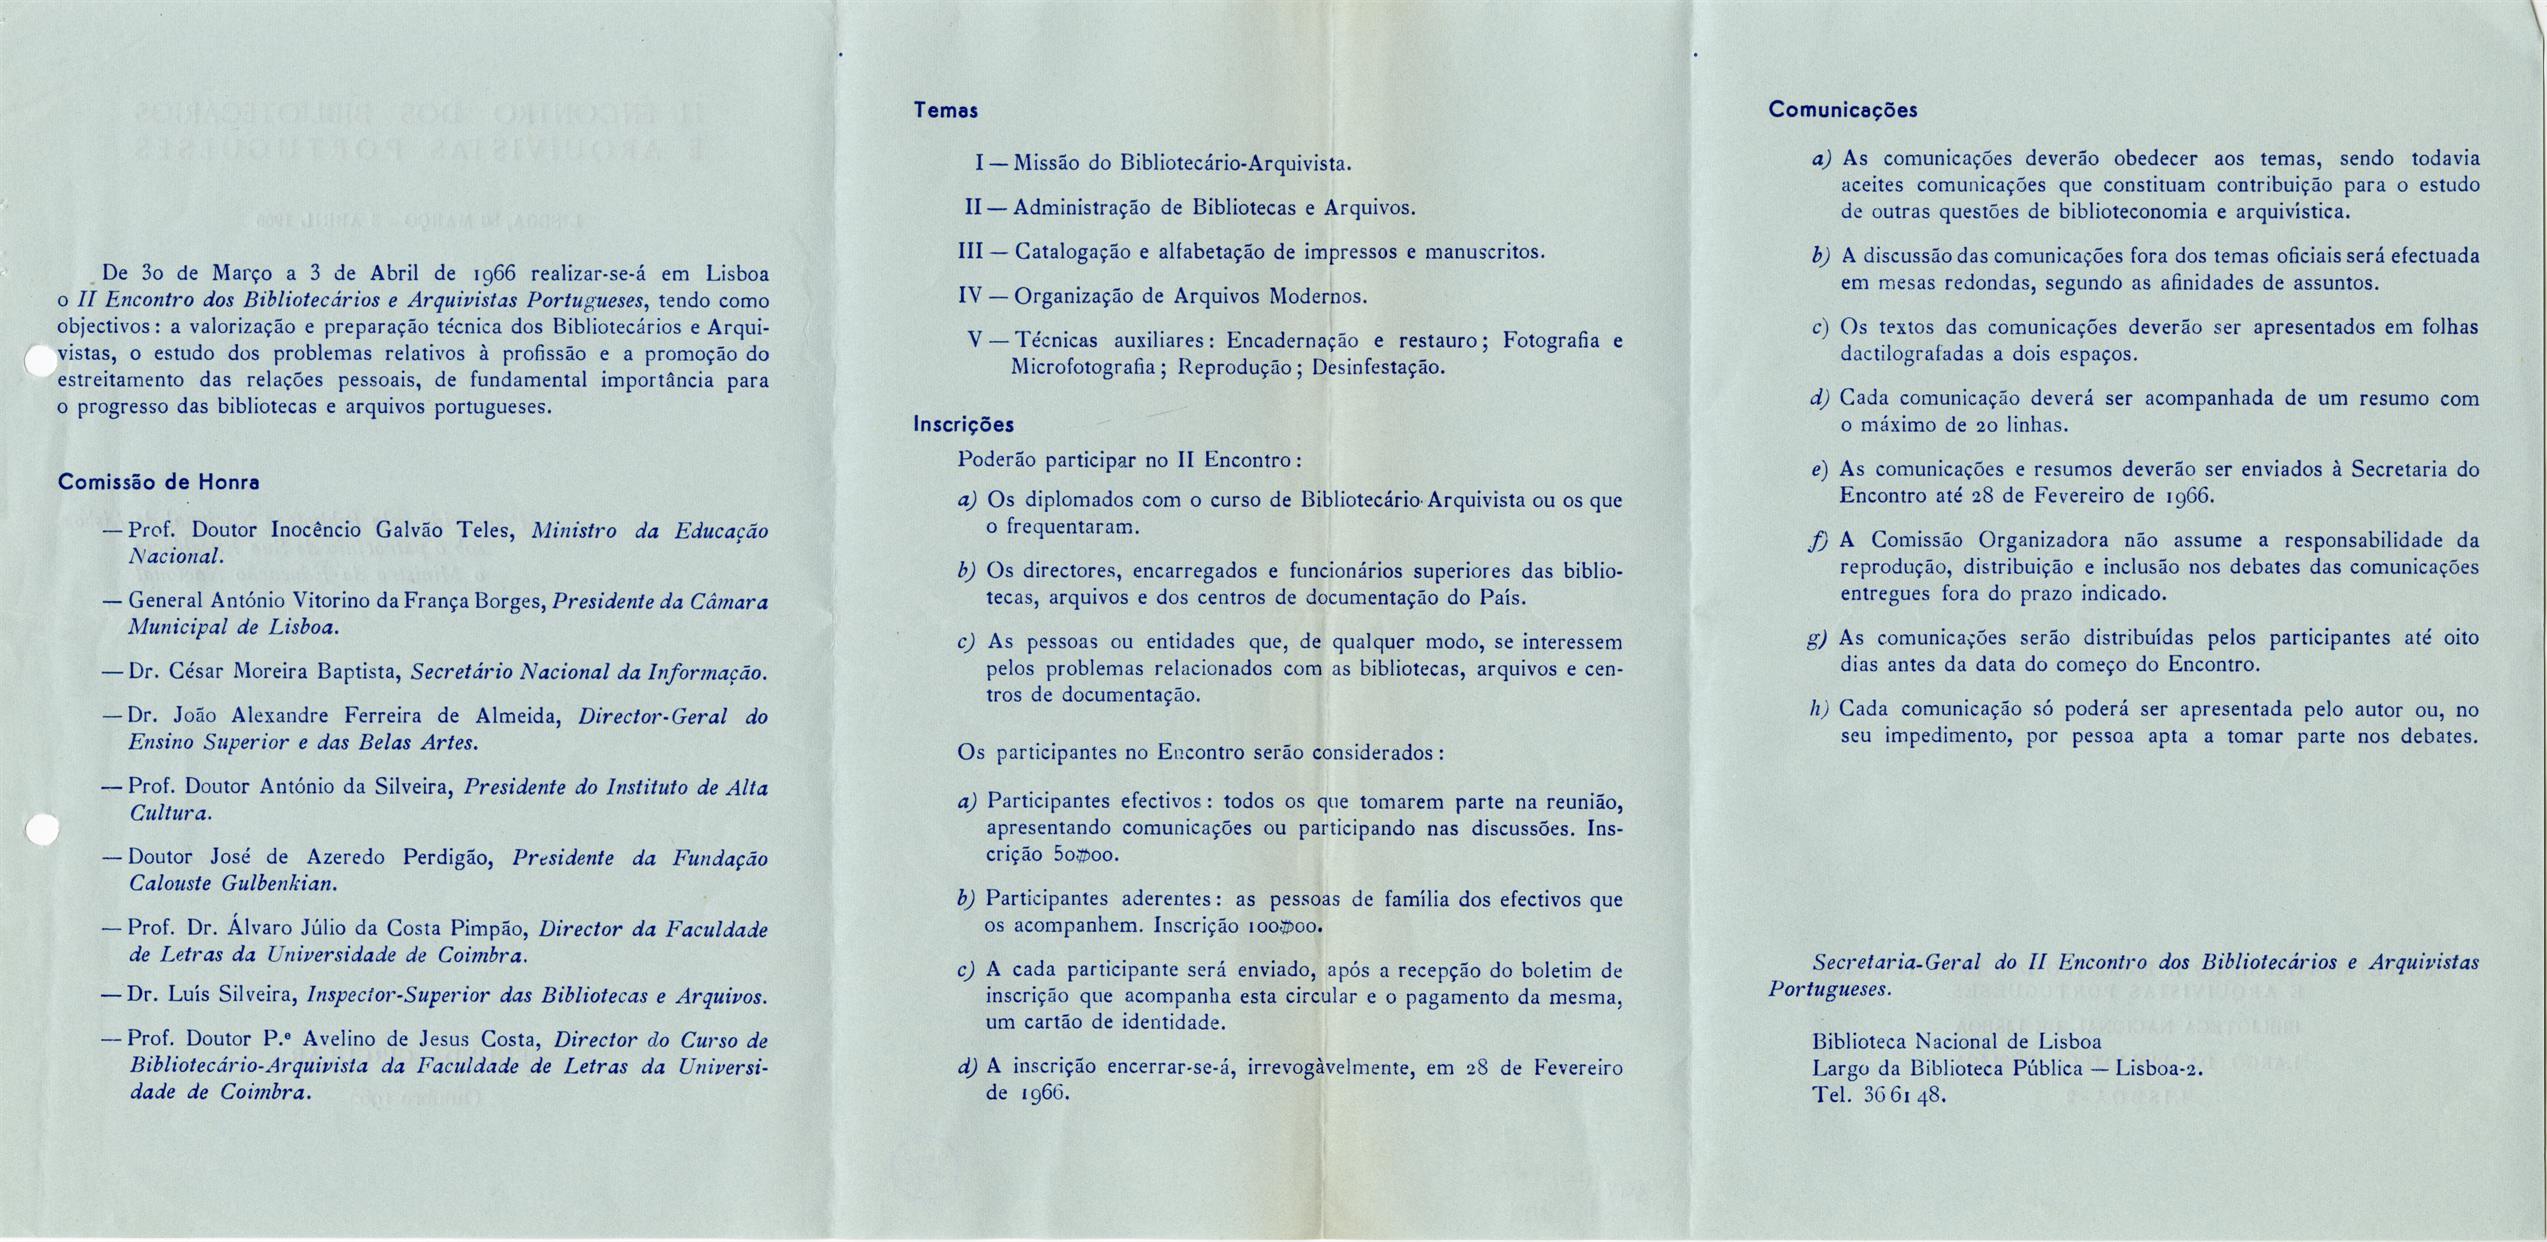 II Encontro dos Bibliotecários e Arquivistas Portugueses : segunda circular